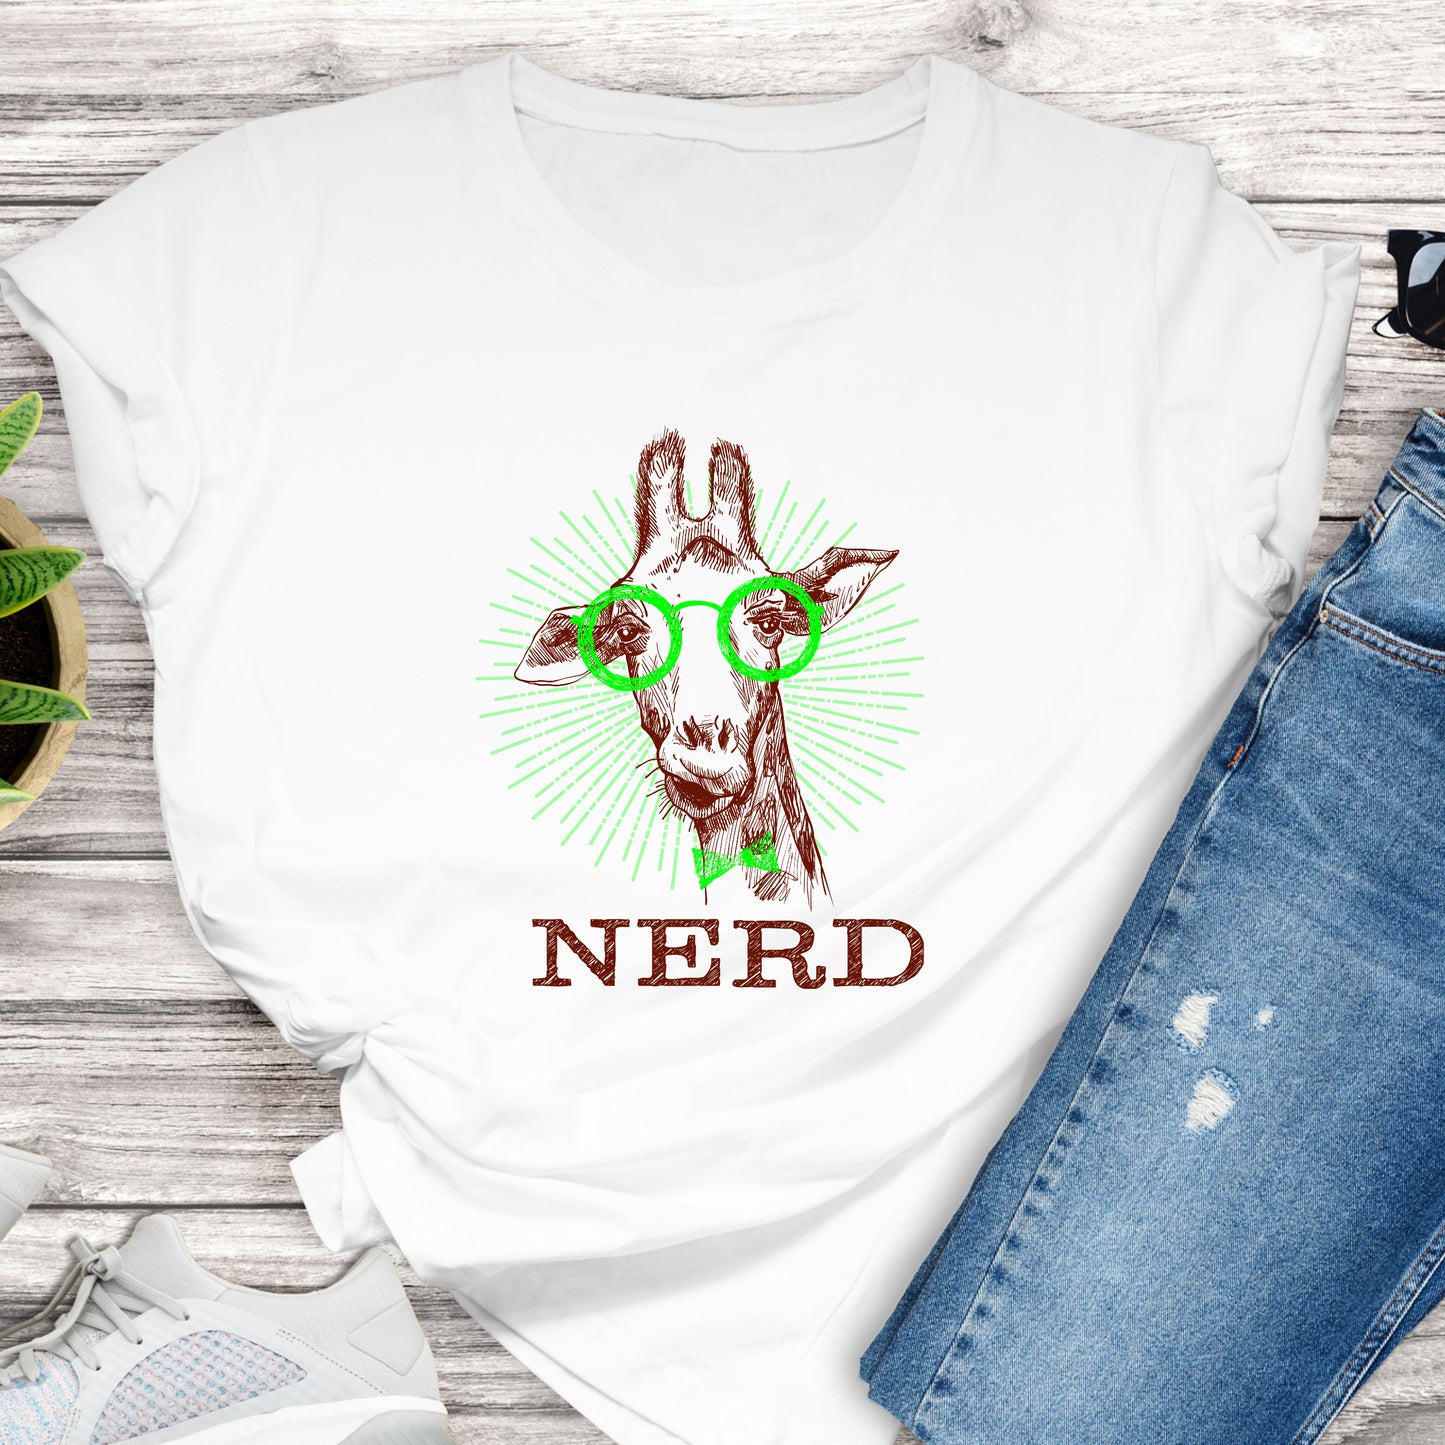 Giraffe T-Shirt For Nerd TShirt For Cool Geek Shirt For Book Worm T Shirt For Math Nerd T-Shirt For Teacher Shirt For Developer TShirt For Librarian Shirt For Engineer Gift